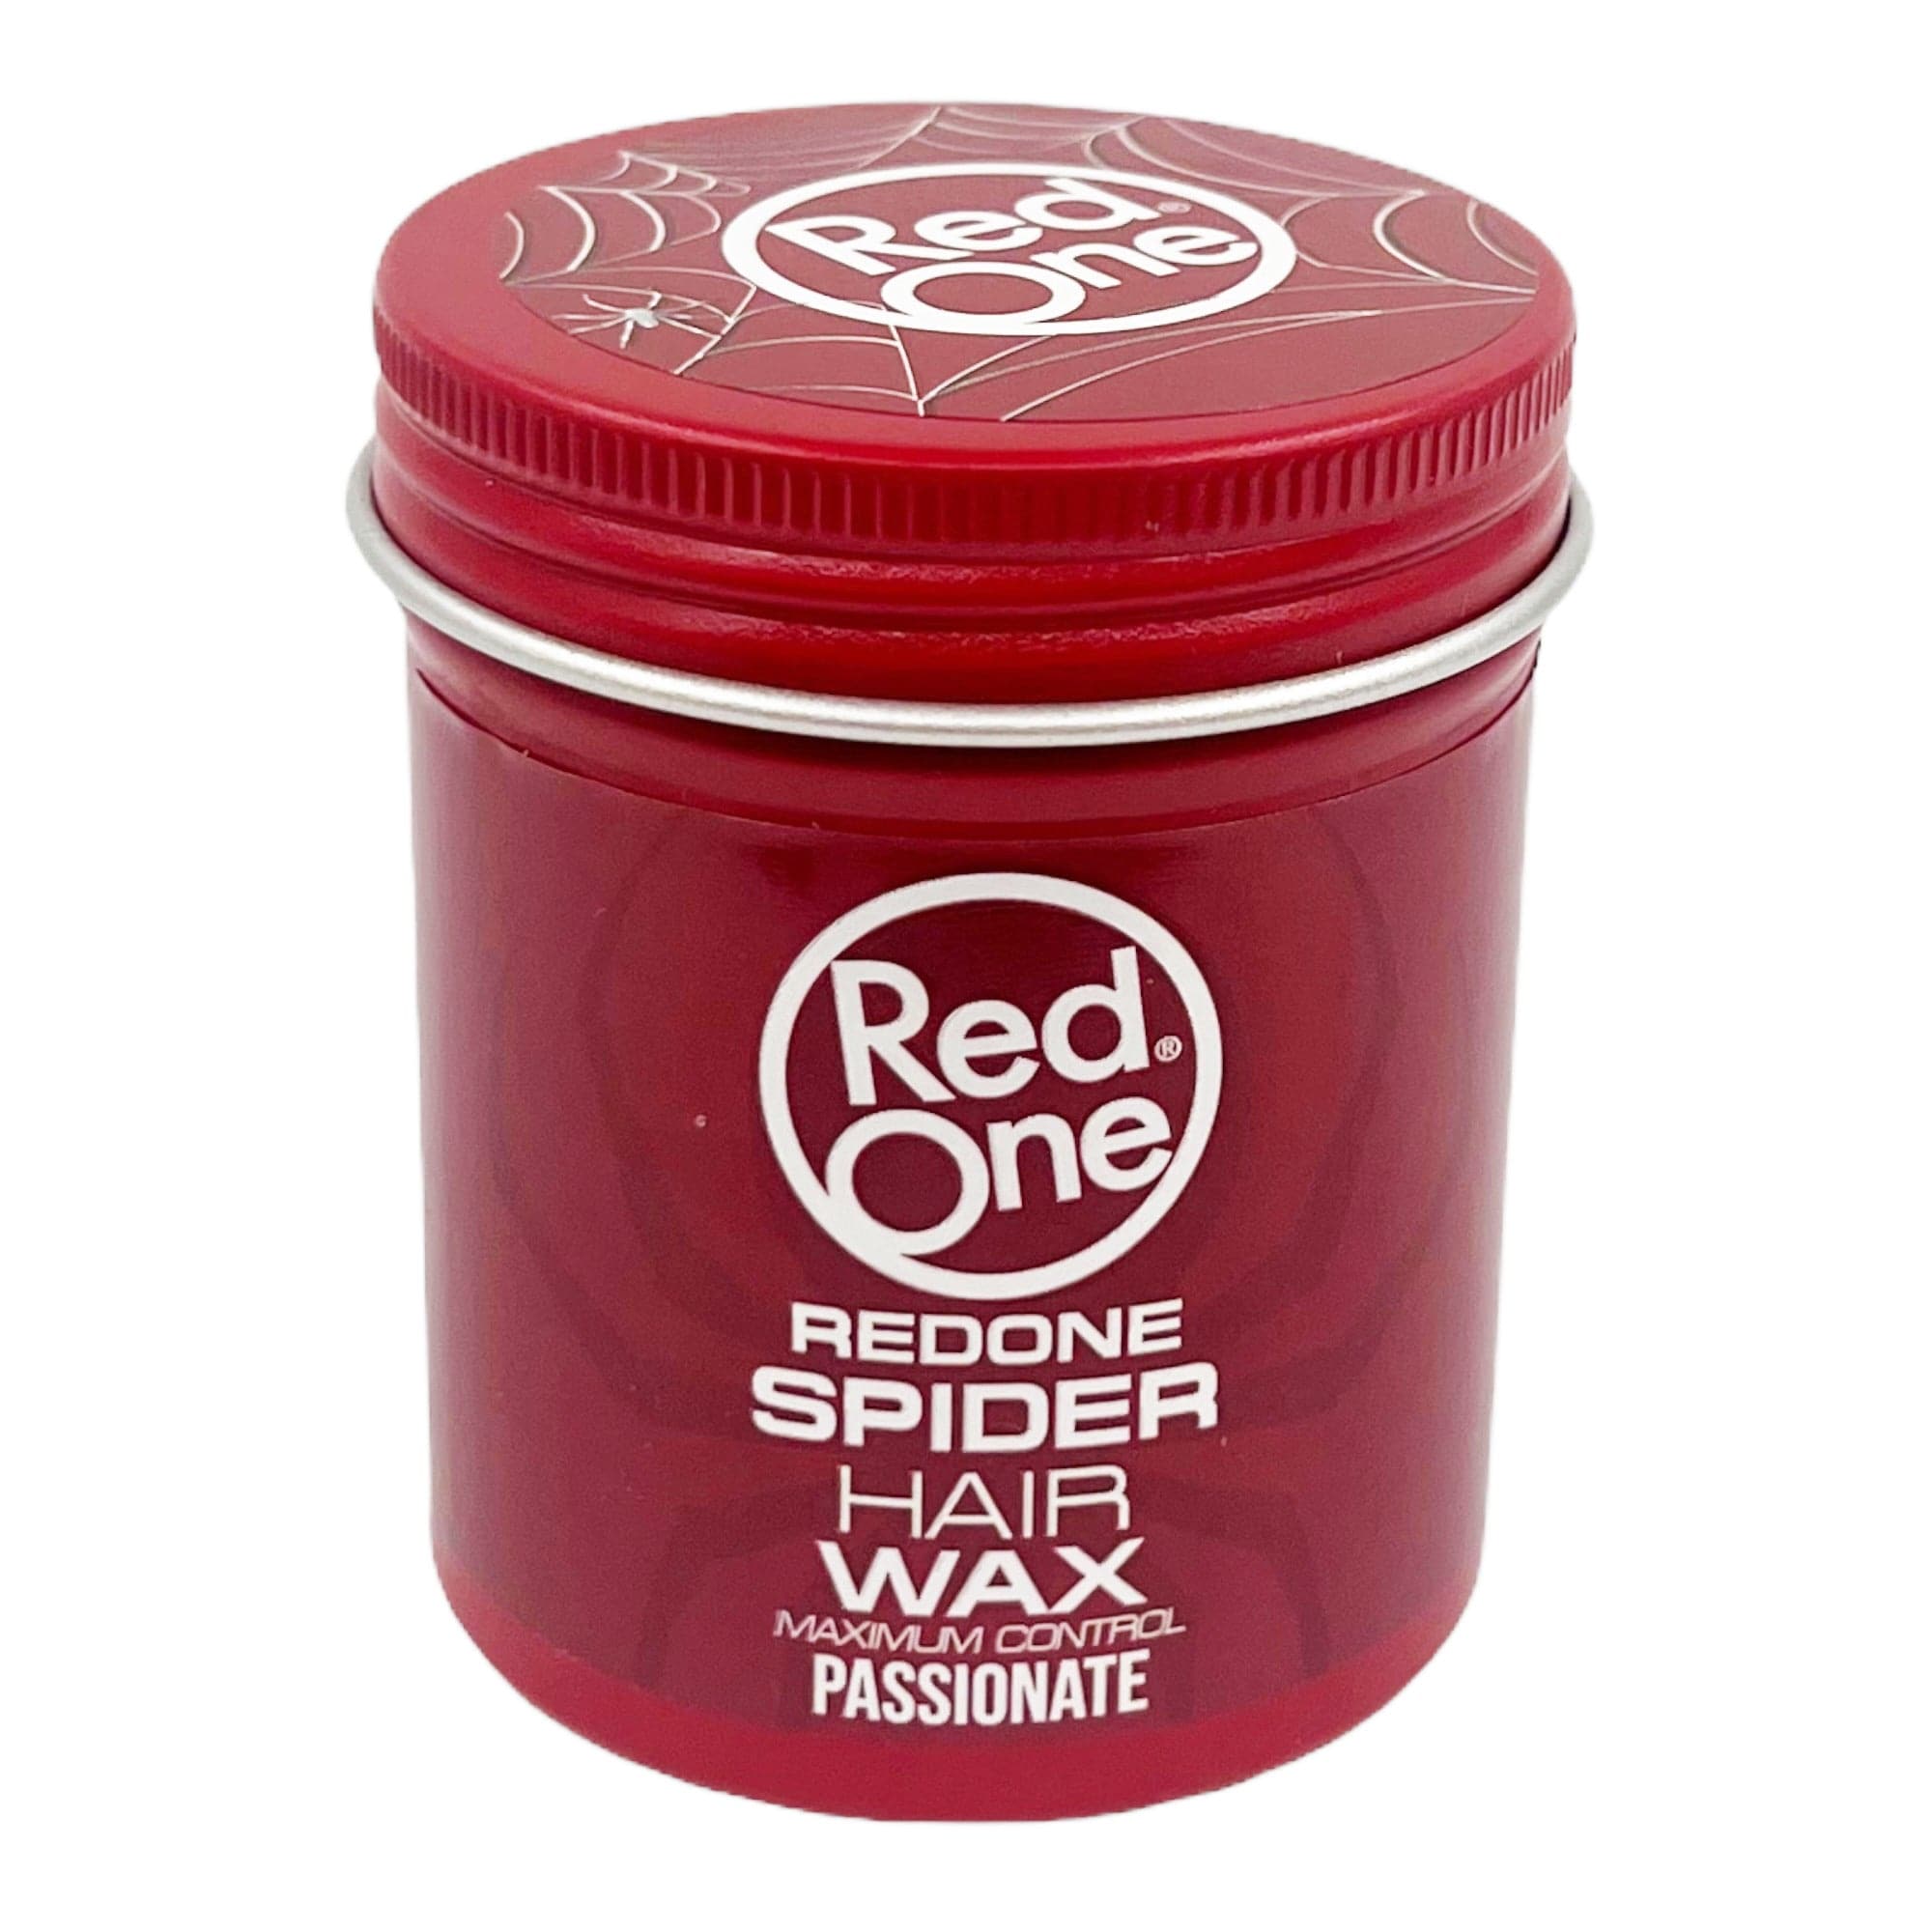 Redone - Spider Hair Wax Passionate Maximum Control 100ml